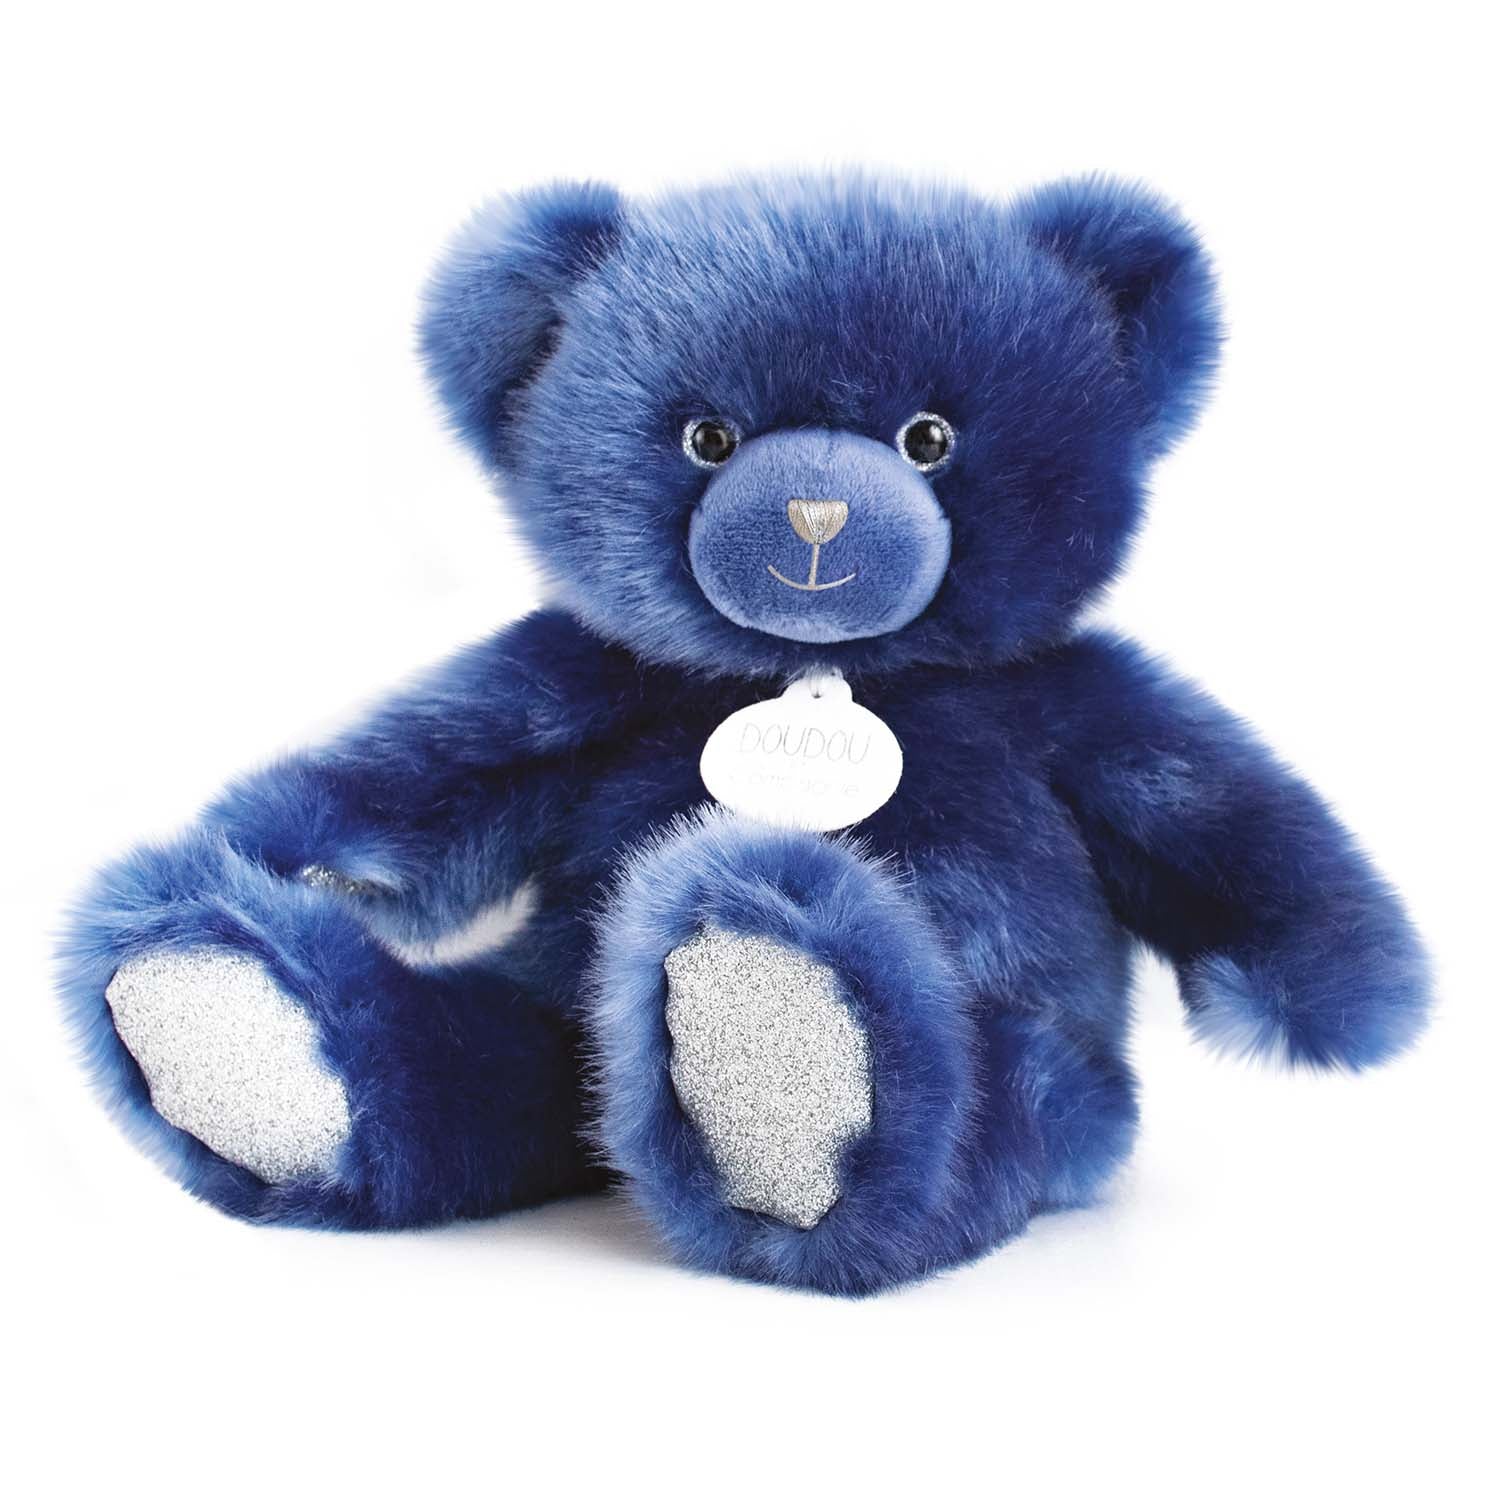 Doudou et Compagnie Classic Plush Stuffed Animal Teddy Bear Plushies